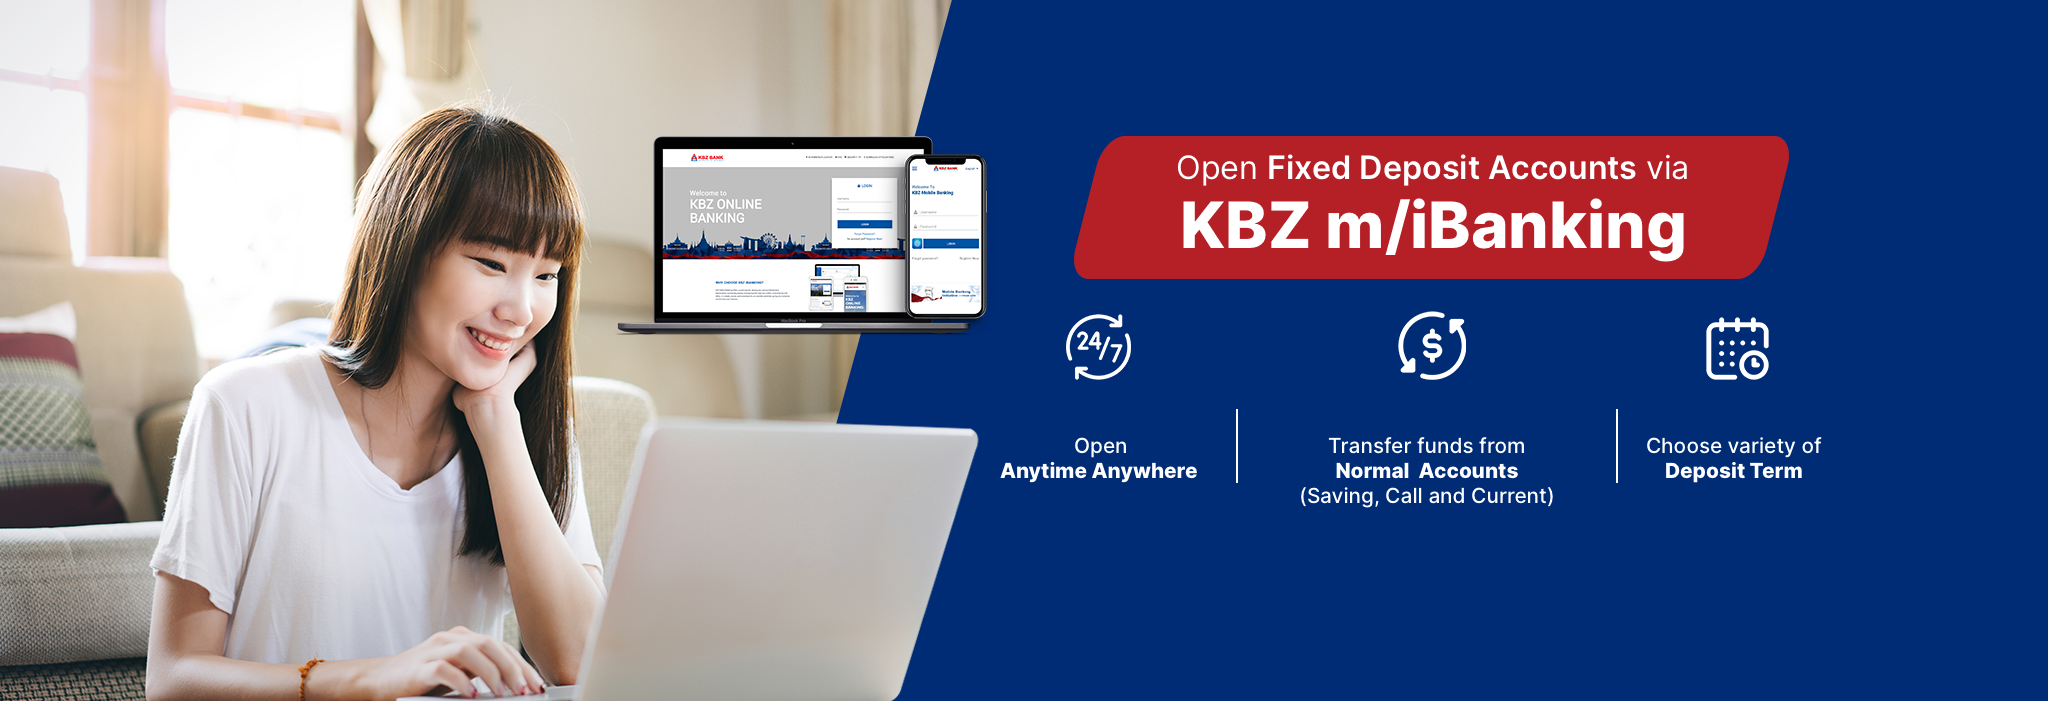 Fixed Deposit Account via KBZ m/iBanking